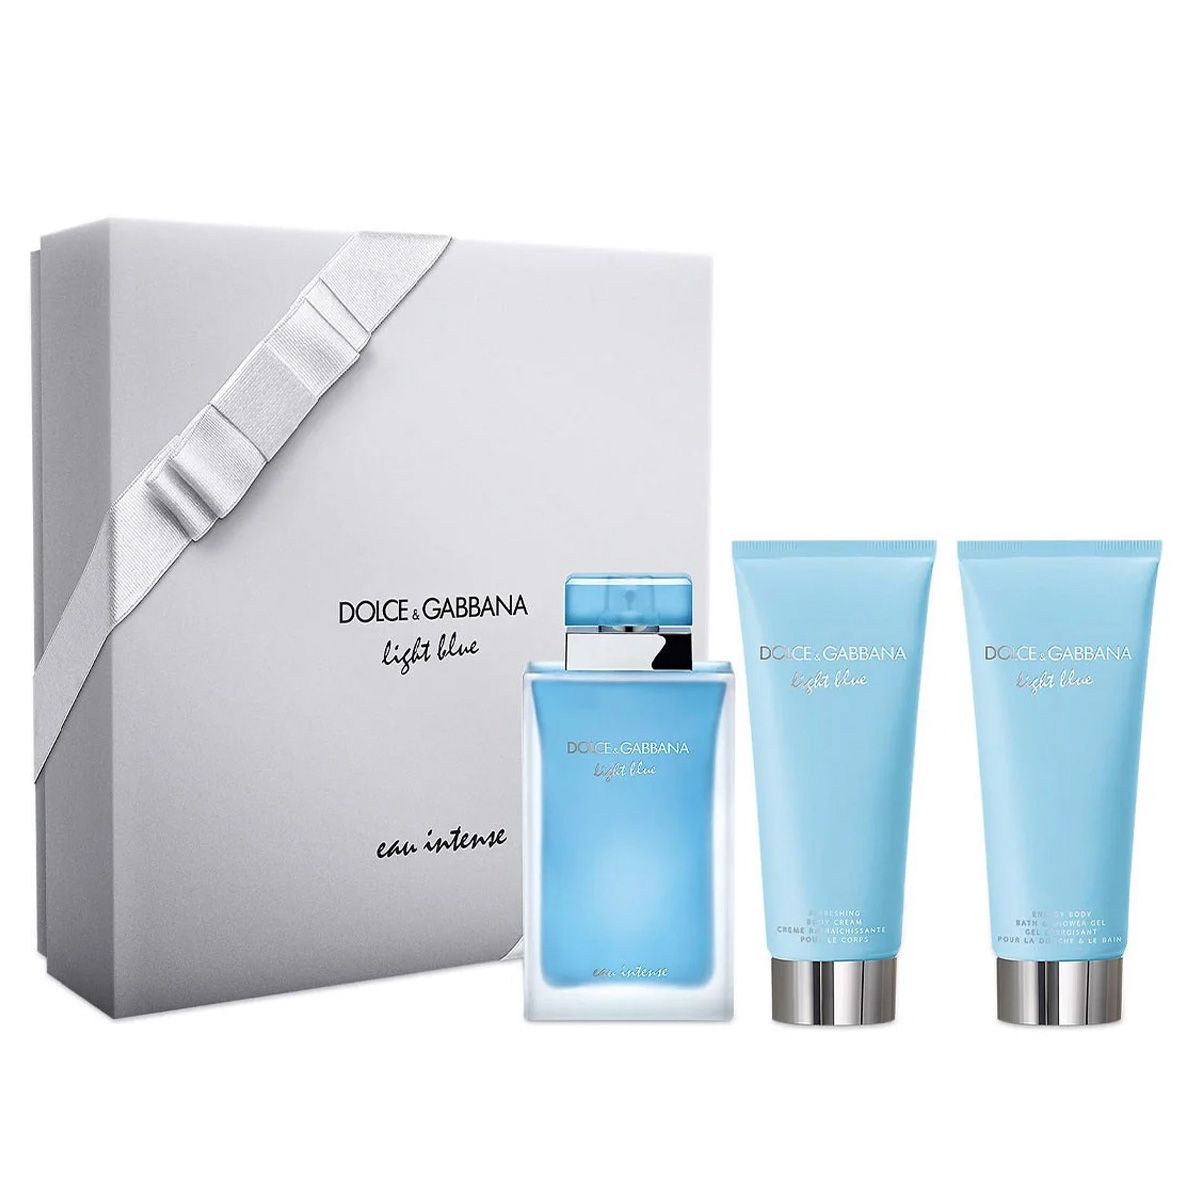  Gift Set Dolce & Gabbana Light Blue Eau Intense 3pcs EDP 100ml + 100ml Body Cream + Body Bath & Shower Gel 